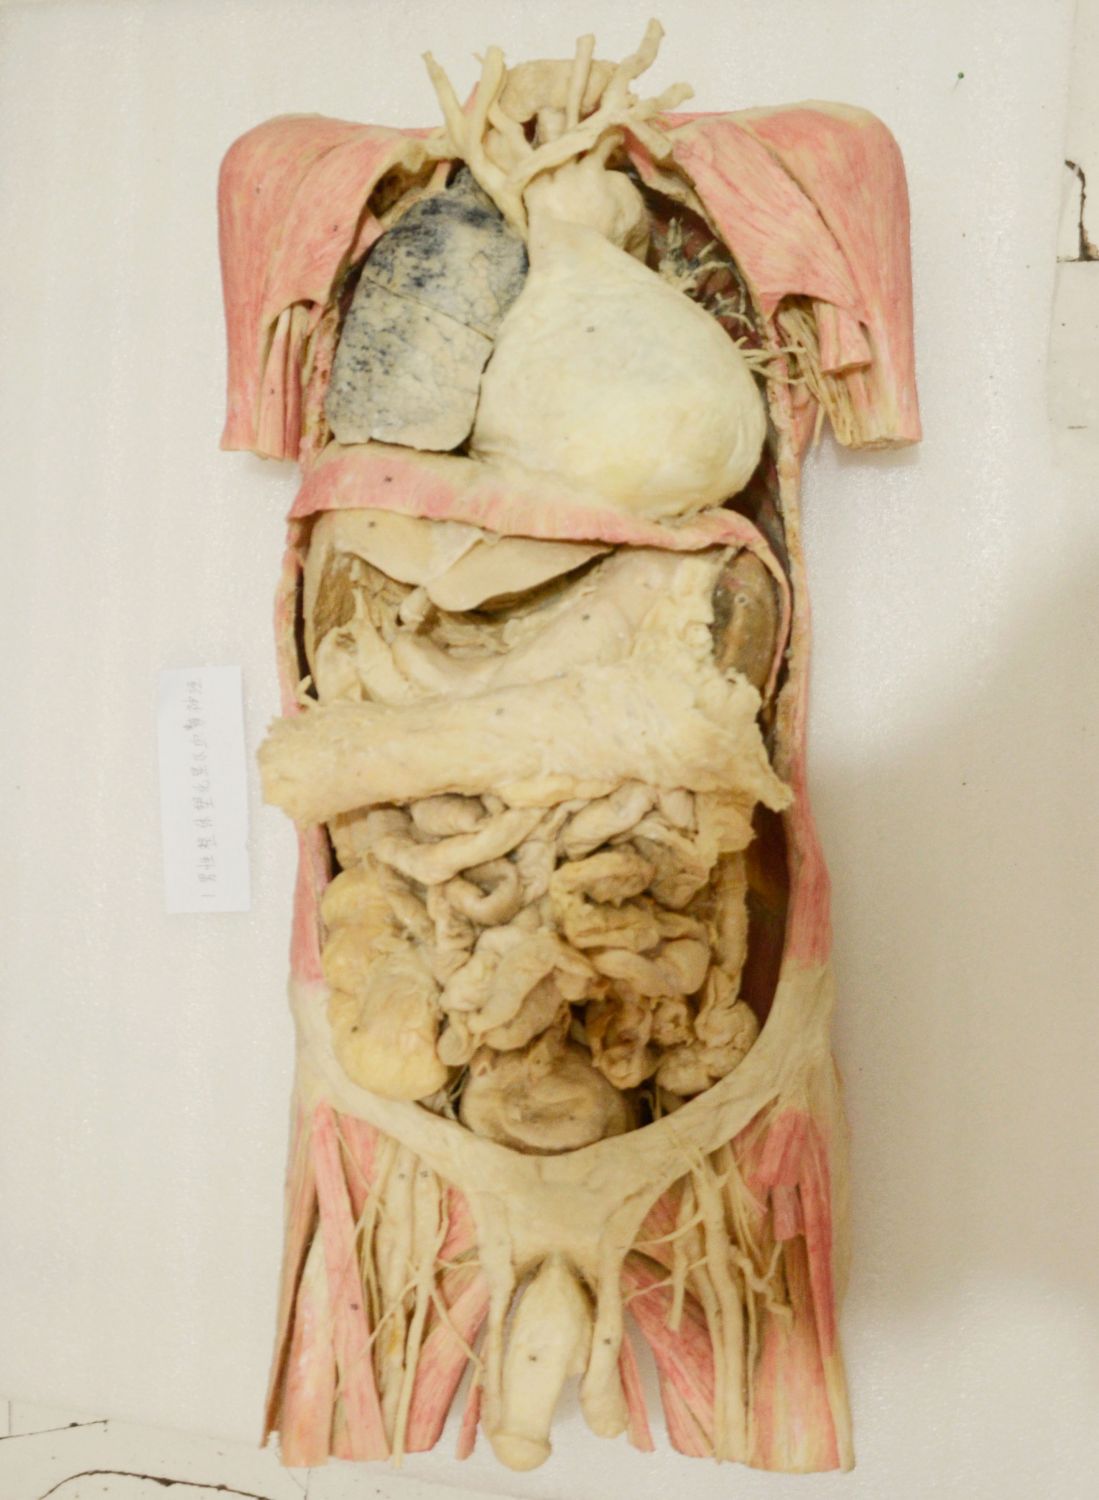 plastination torso specimen